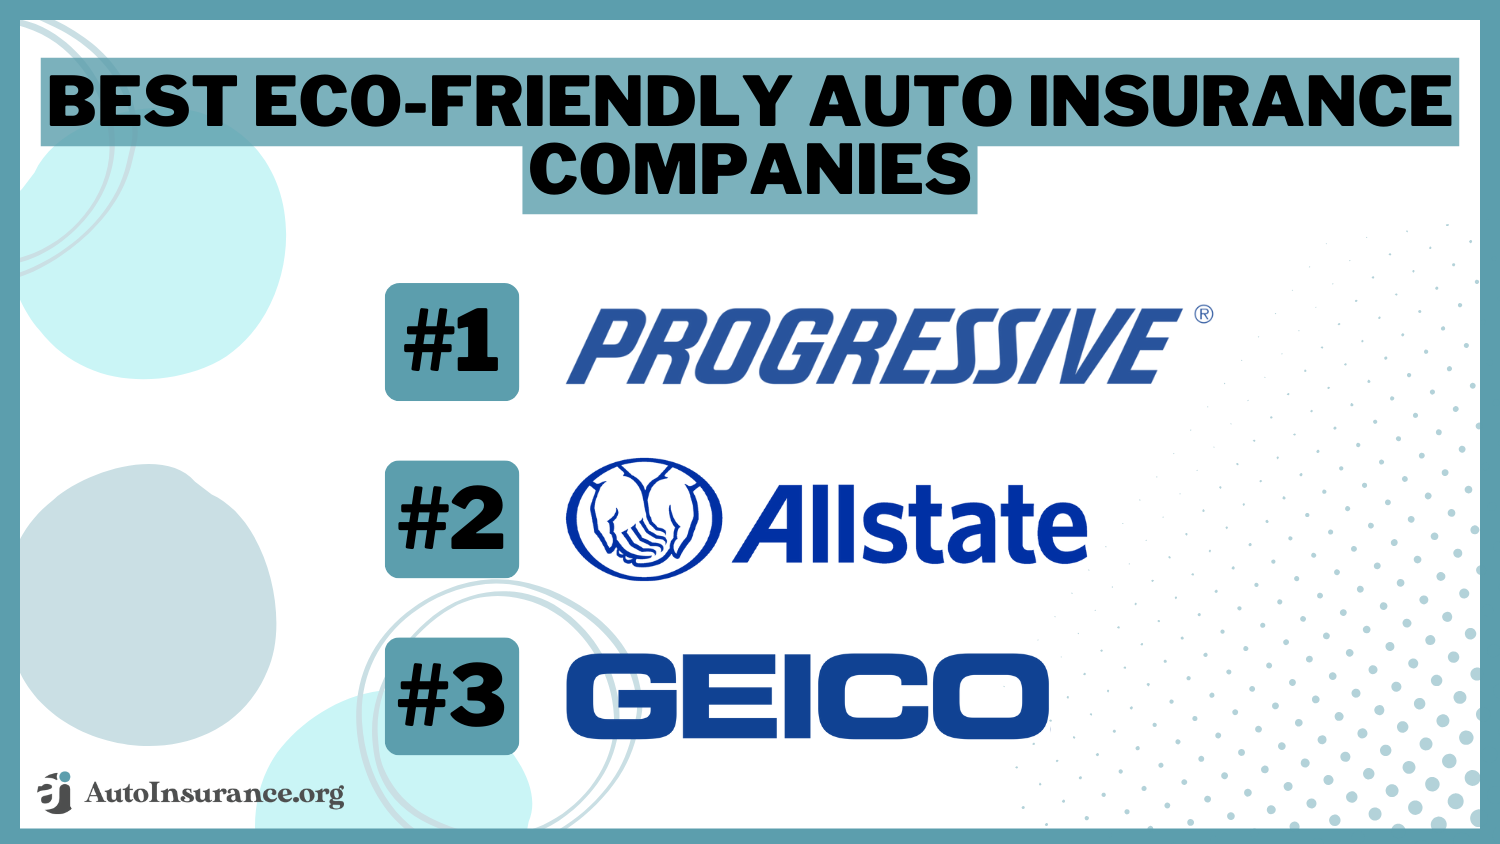 best eco-friendly auto insurance companies: Progressive, Allstate, Geico